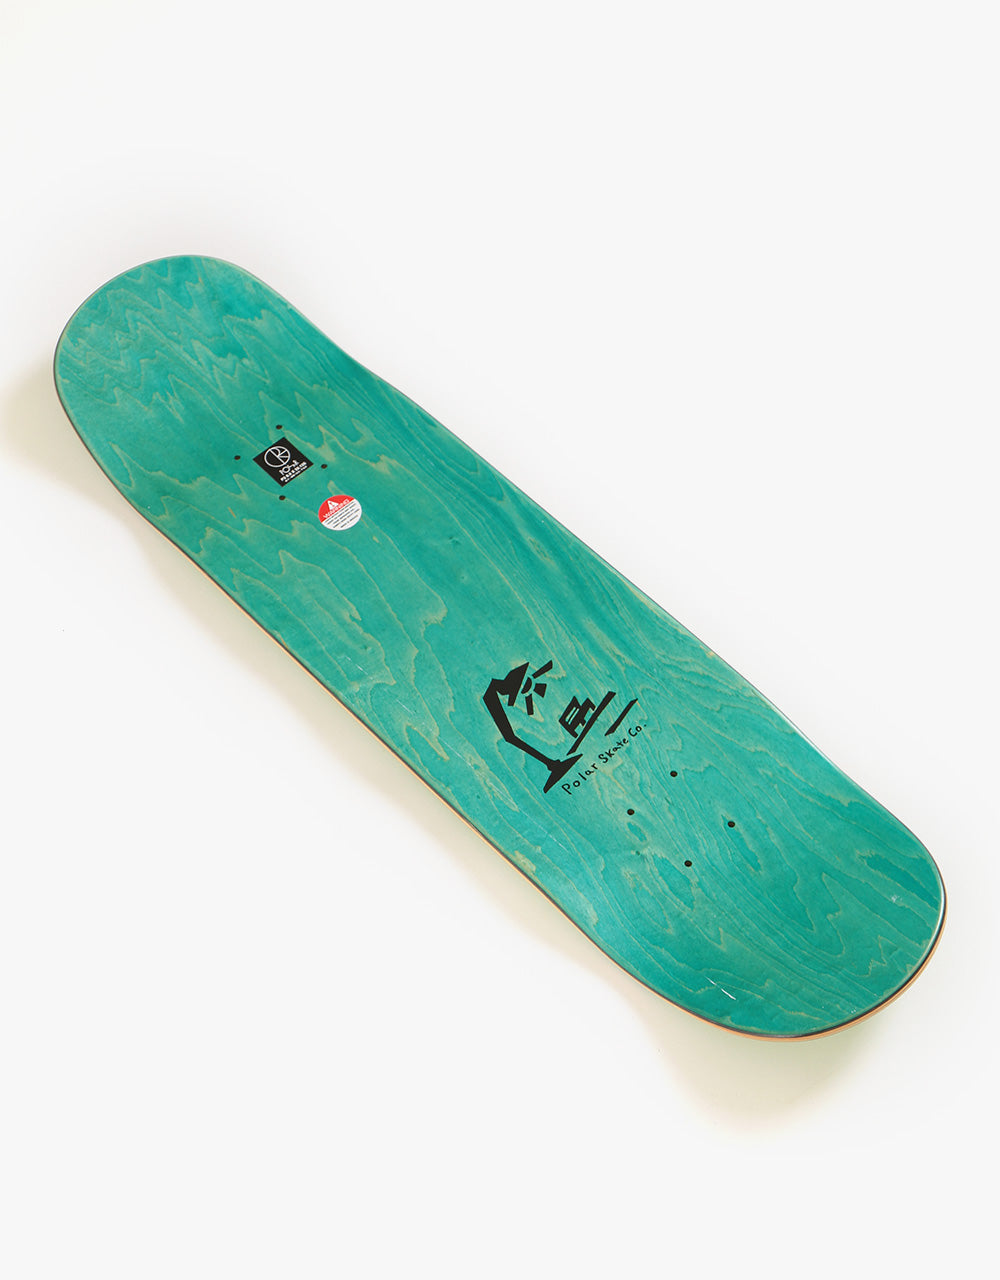 Polar Halberg Insomnia Skateboard Deck - P2 Shape 8.5"